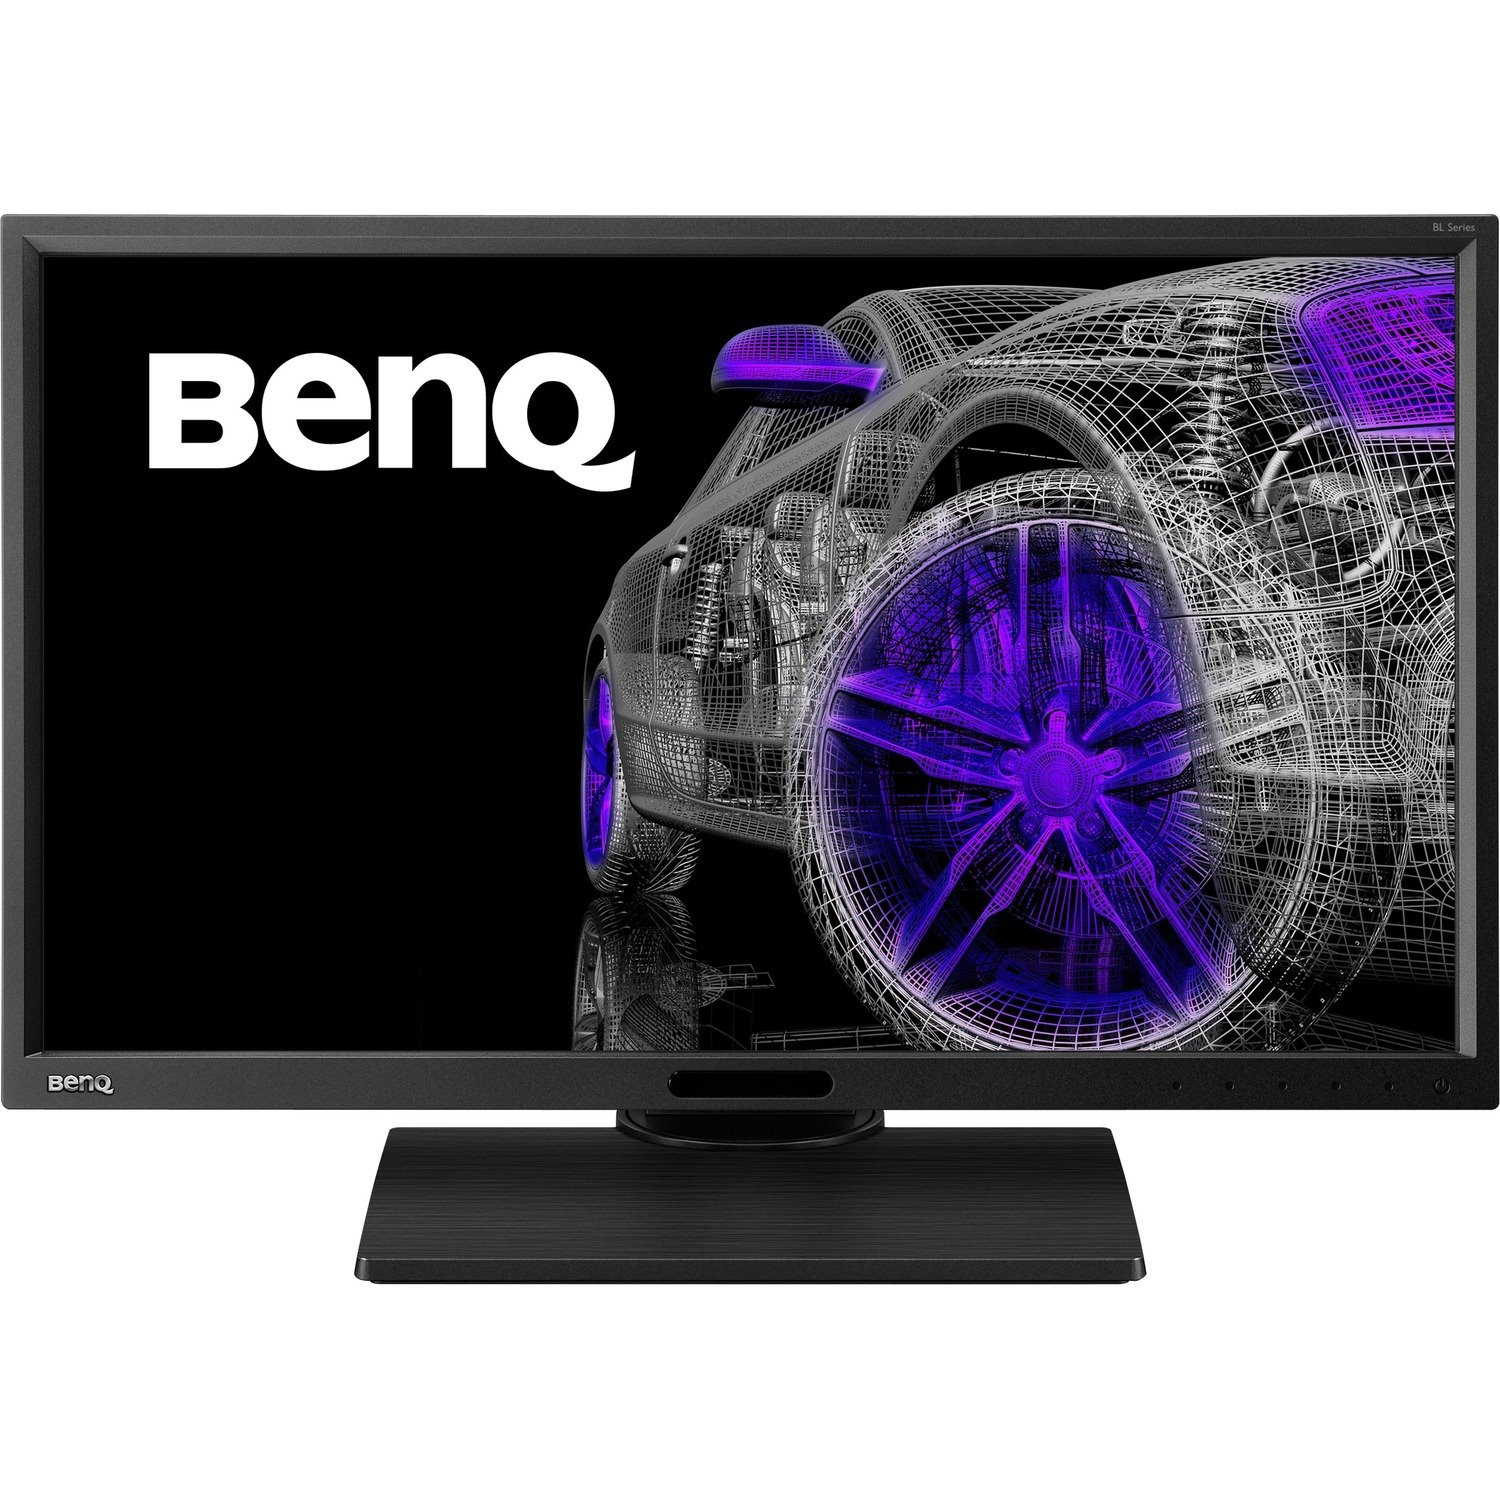 BenQ BL2420PT WQHD LCD Monitor - 16:9 - Black